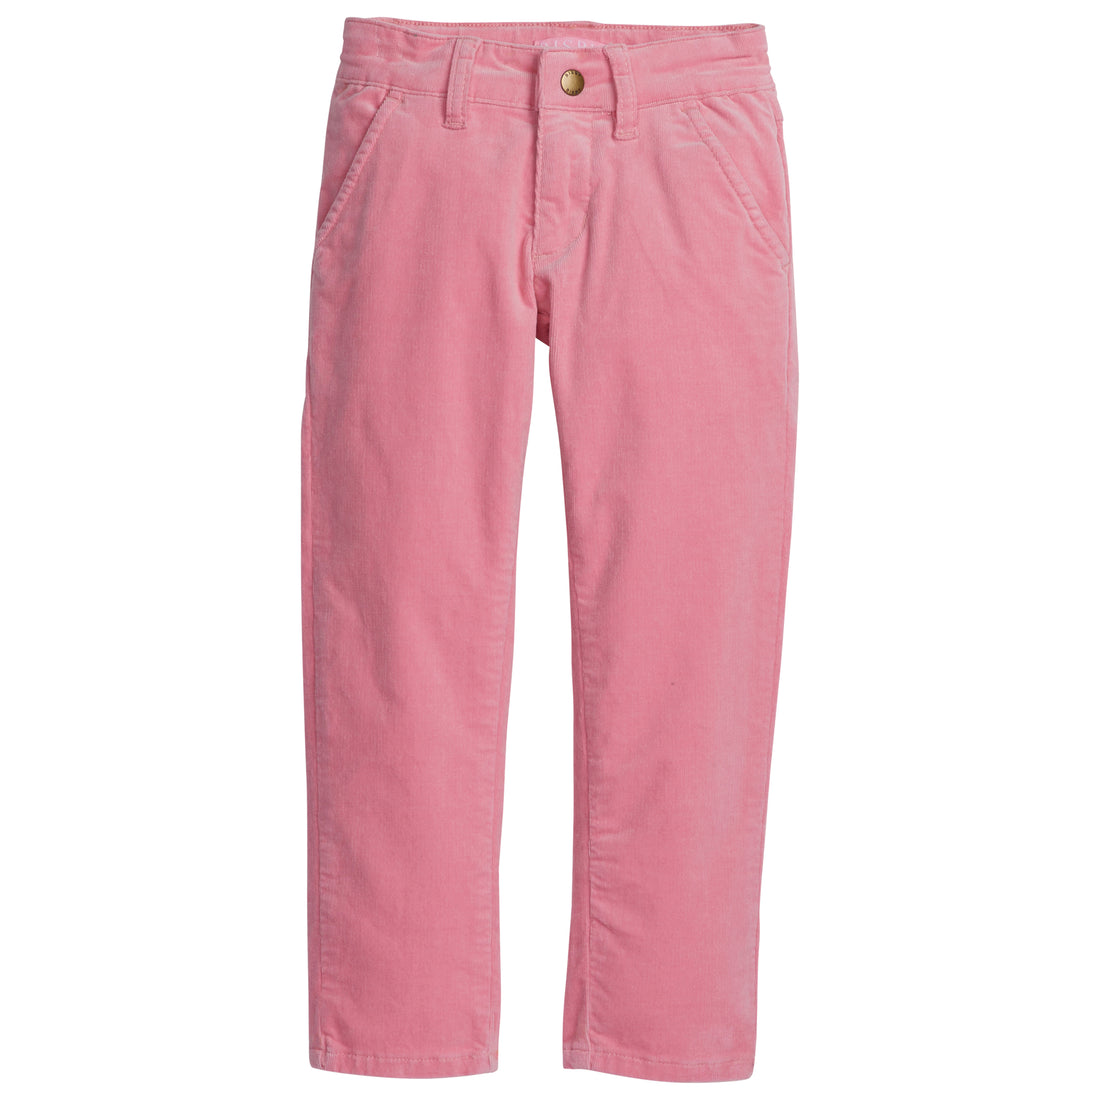 Solid Pink corduroy straight leg pant--TwiggyCord BISBY girls/teen